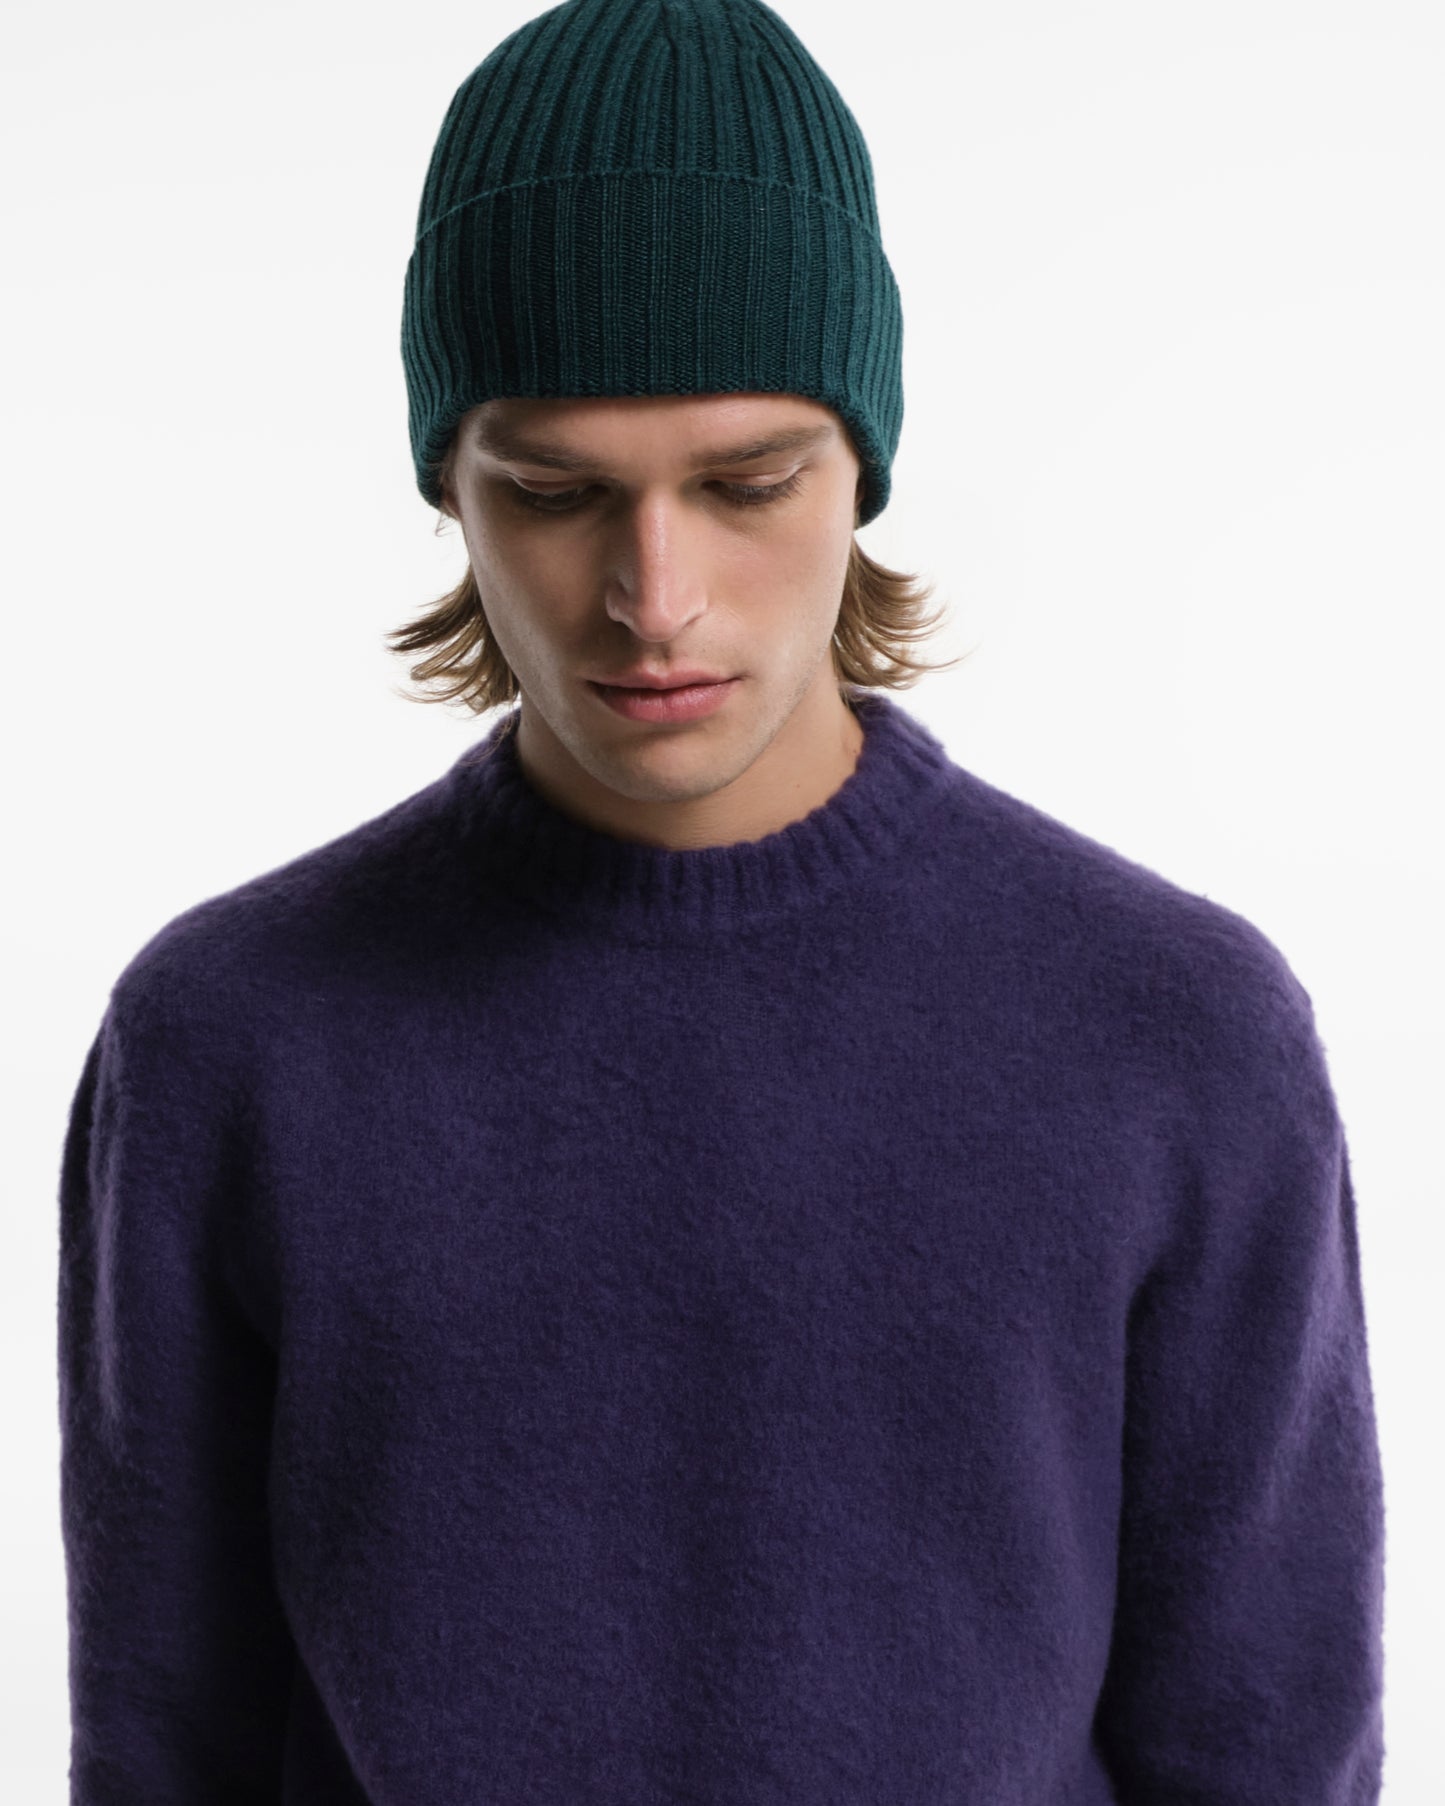 Soft crewneck in purple wool